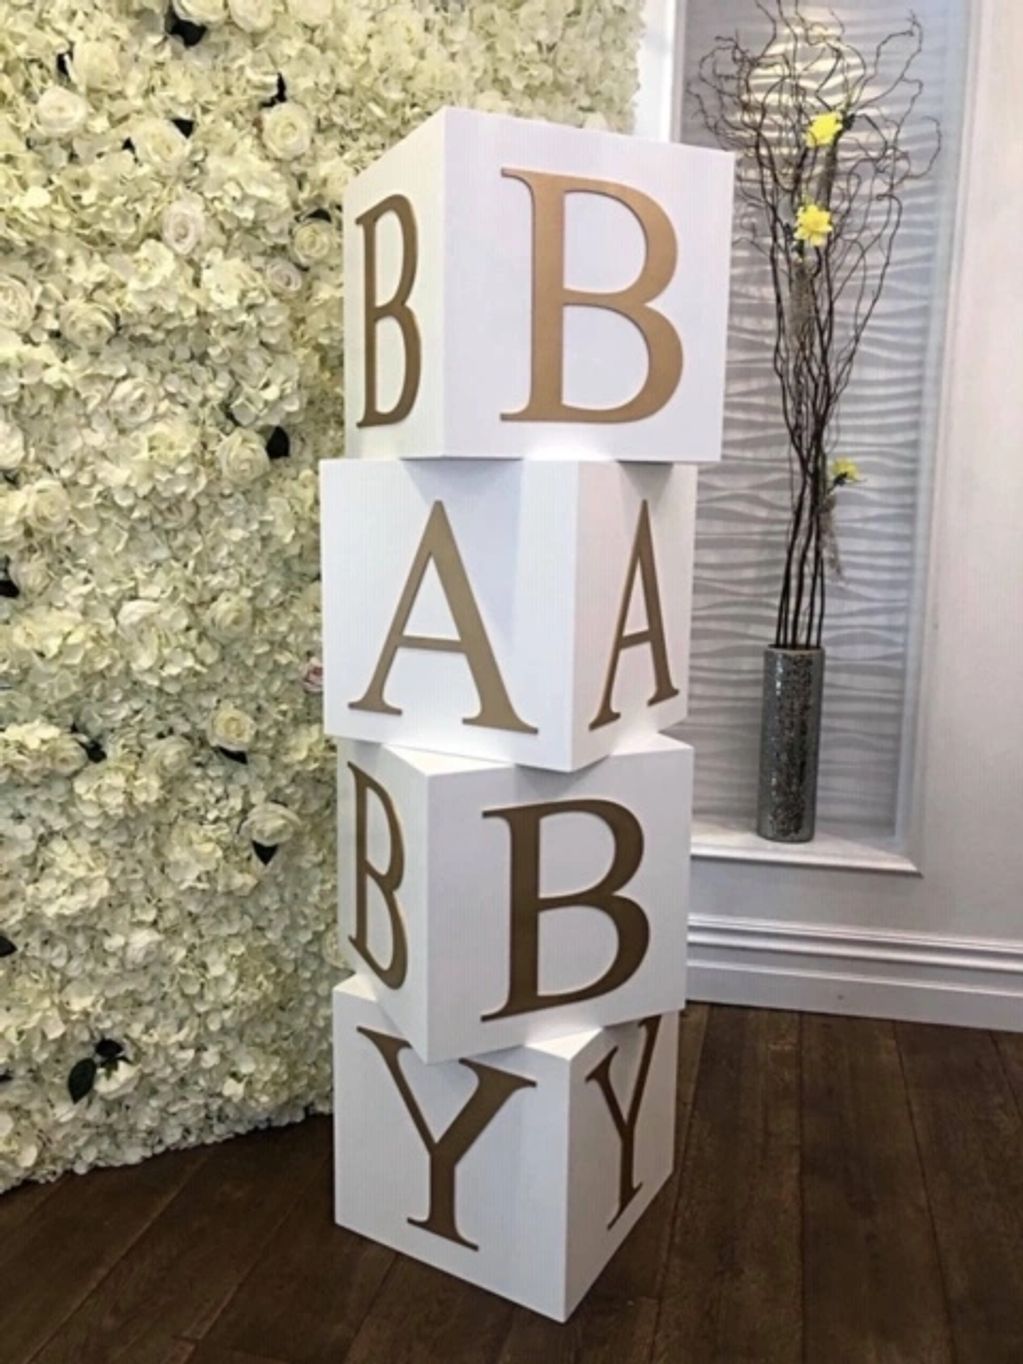 Baby Blocks
Baby Shower
Gender reveal
Baby shower kent